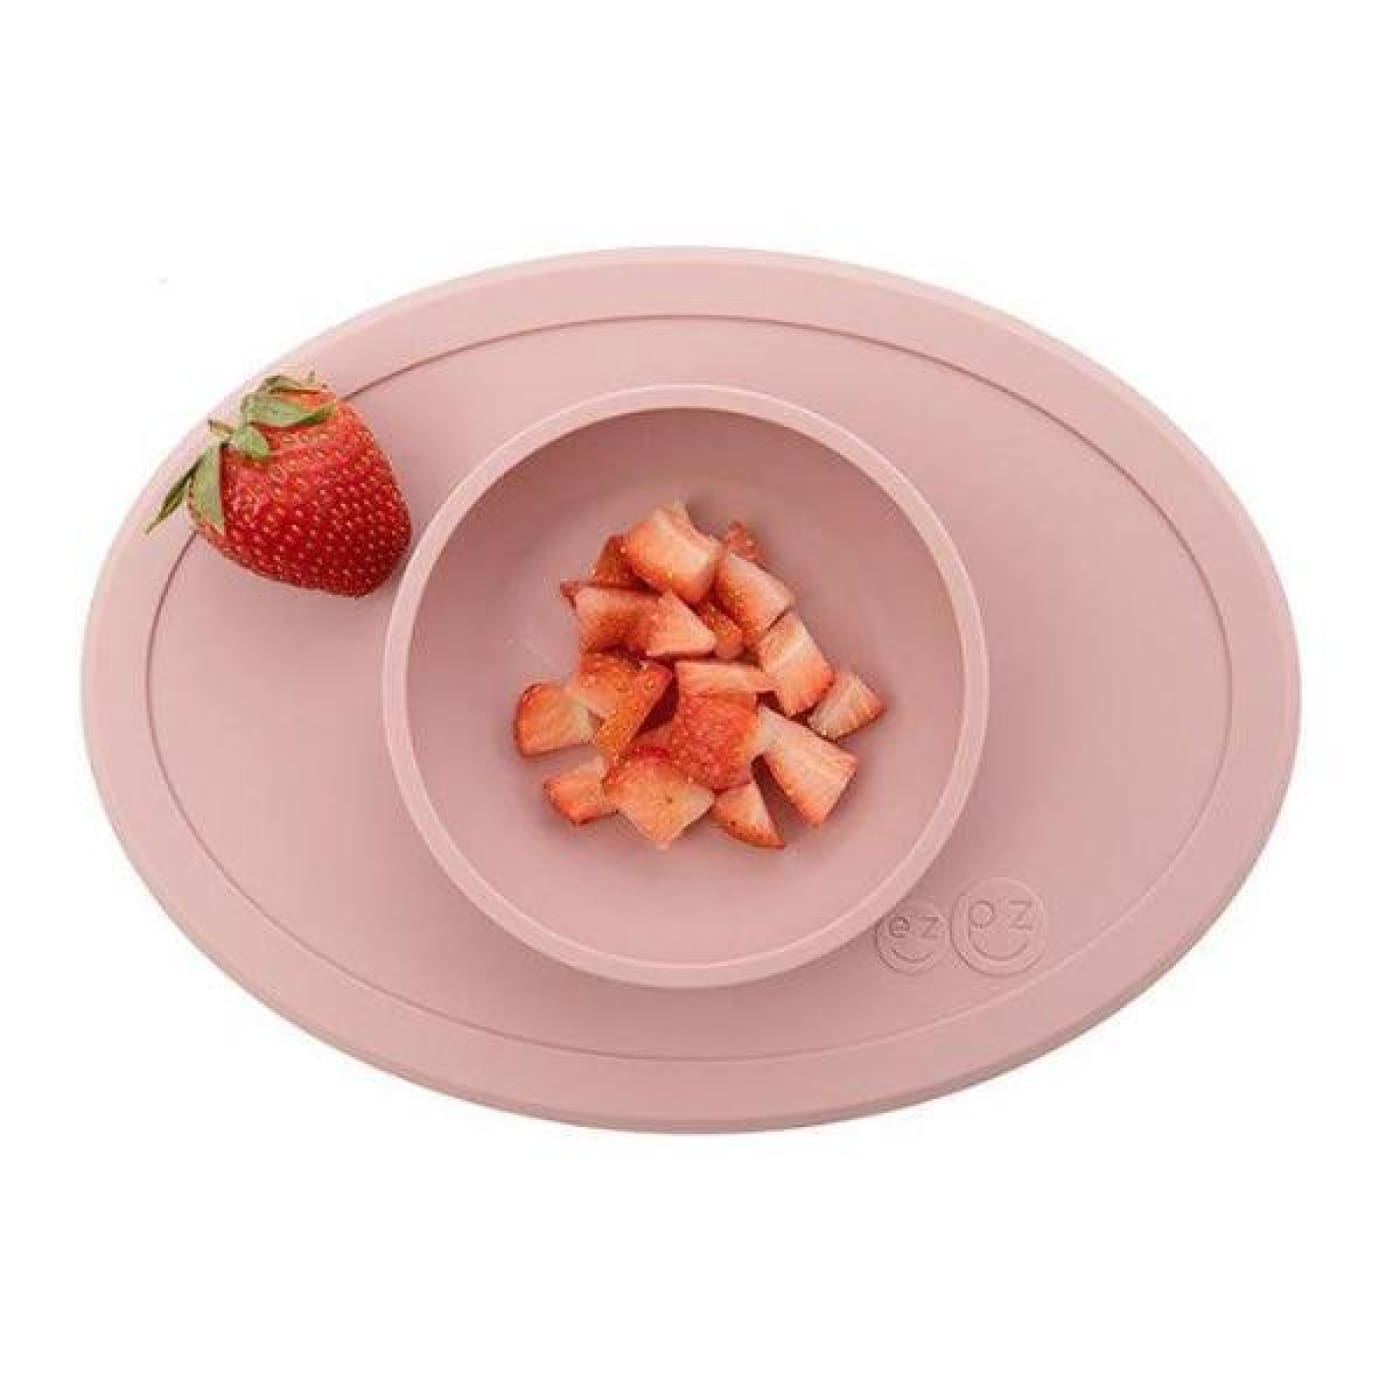 EZPZ Tiny Bowl - Blush - Blush - NURSING & FEEDING - CUTLERY/PLATES/BOWLS/TOYS